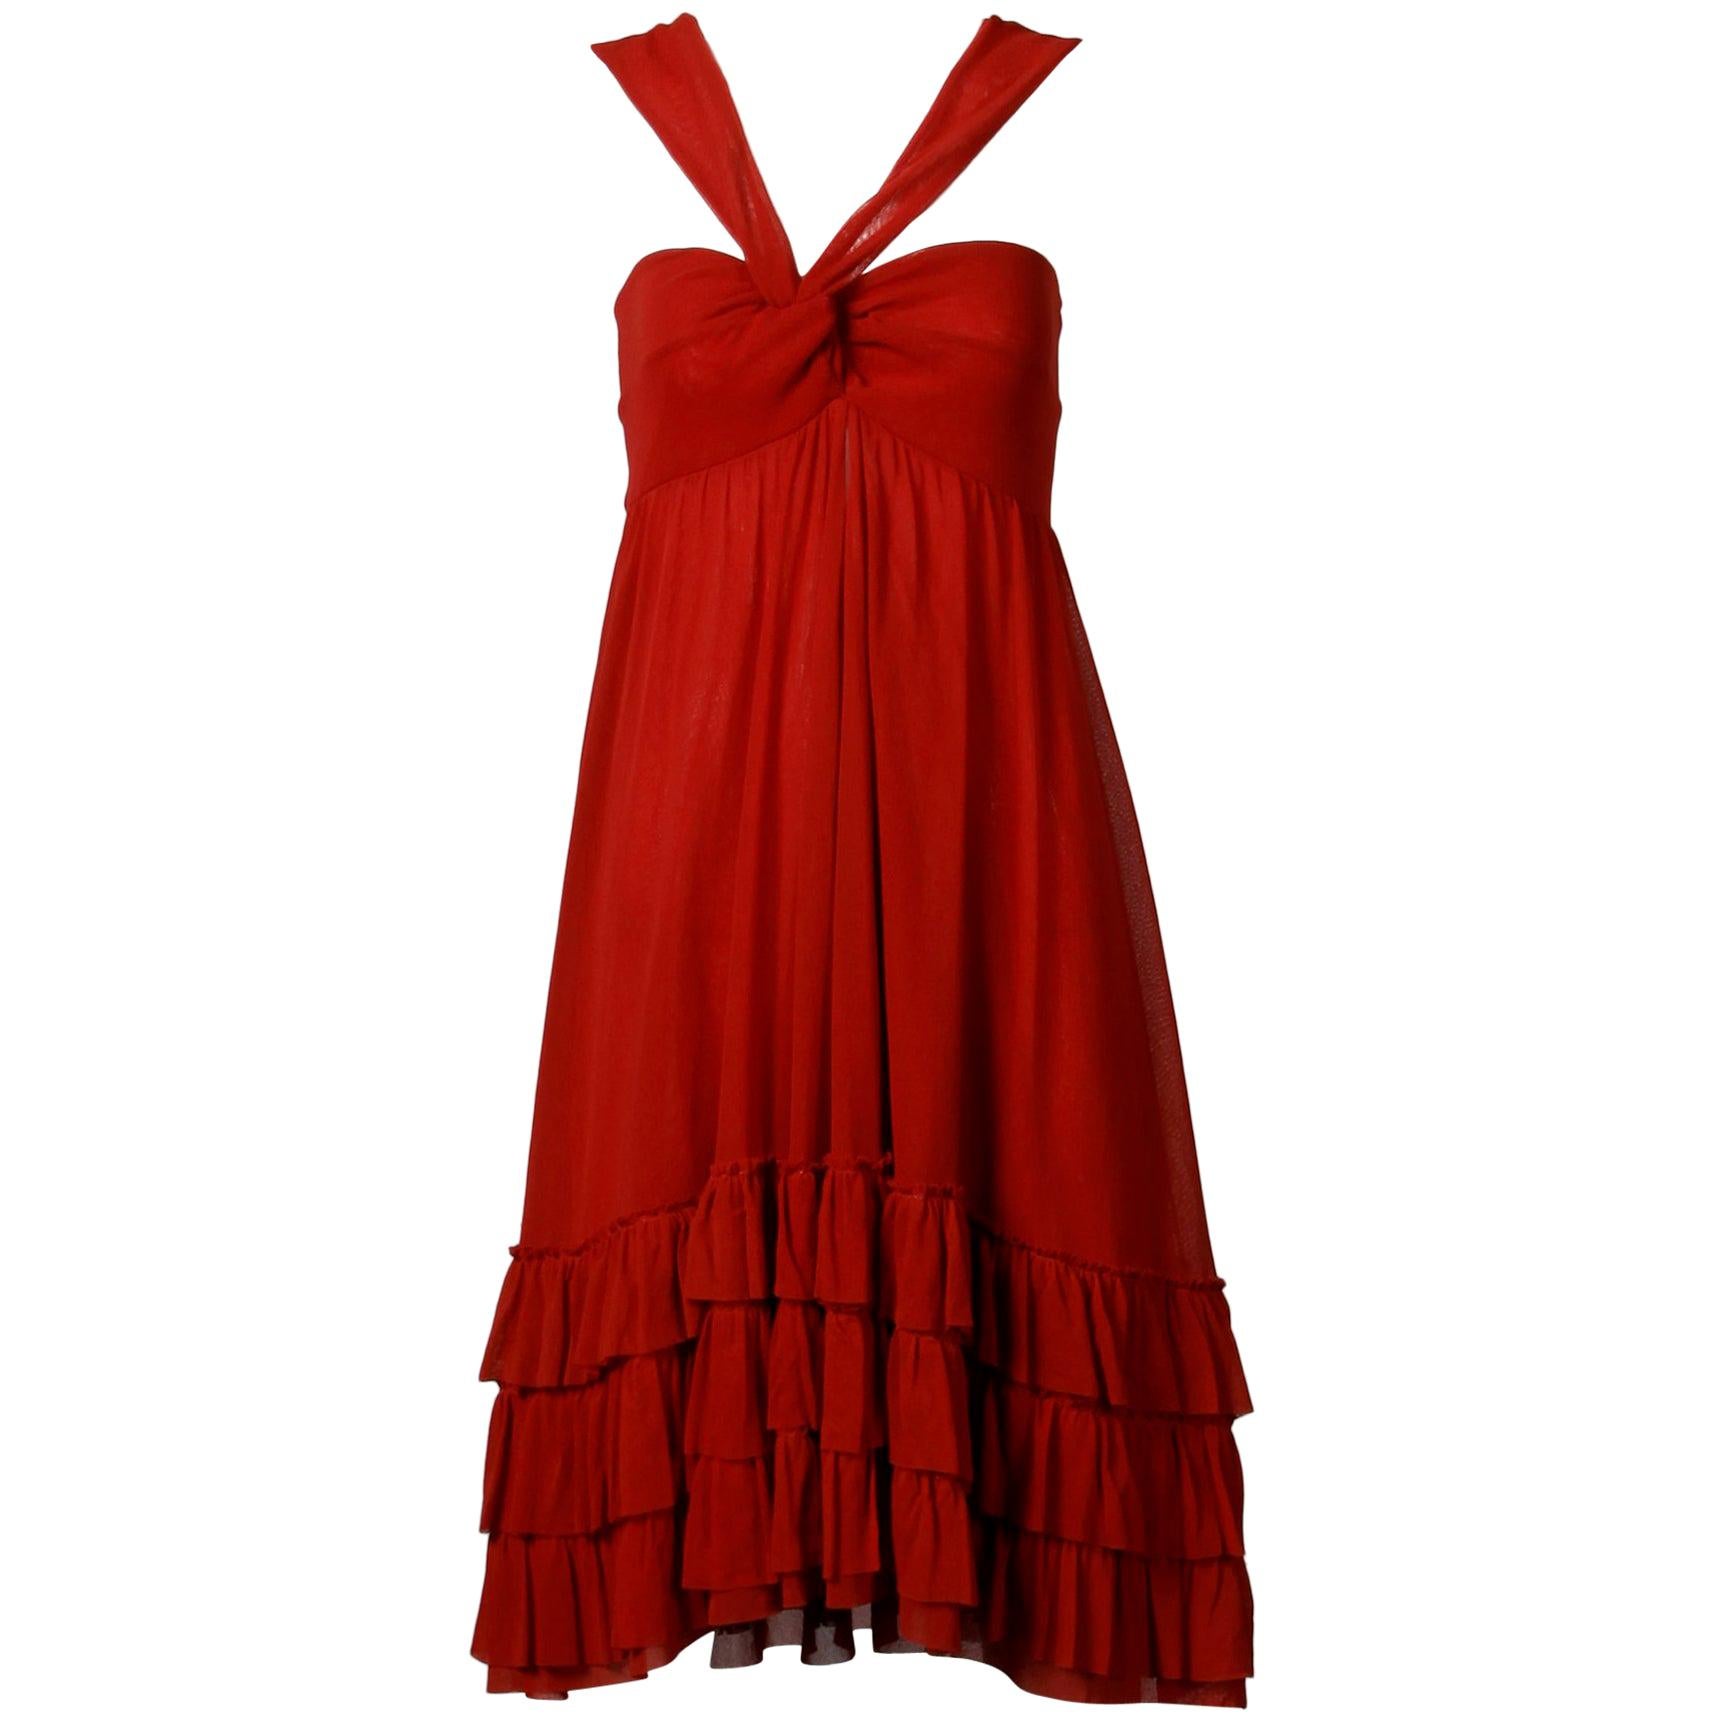 Jean Paul Gaultier Brick Red Mesh Dress with Ruffled Hemline For Sale